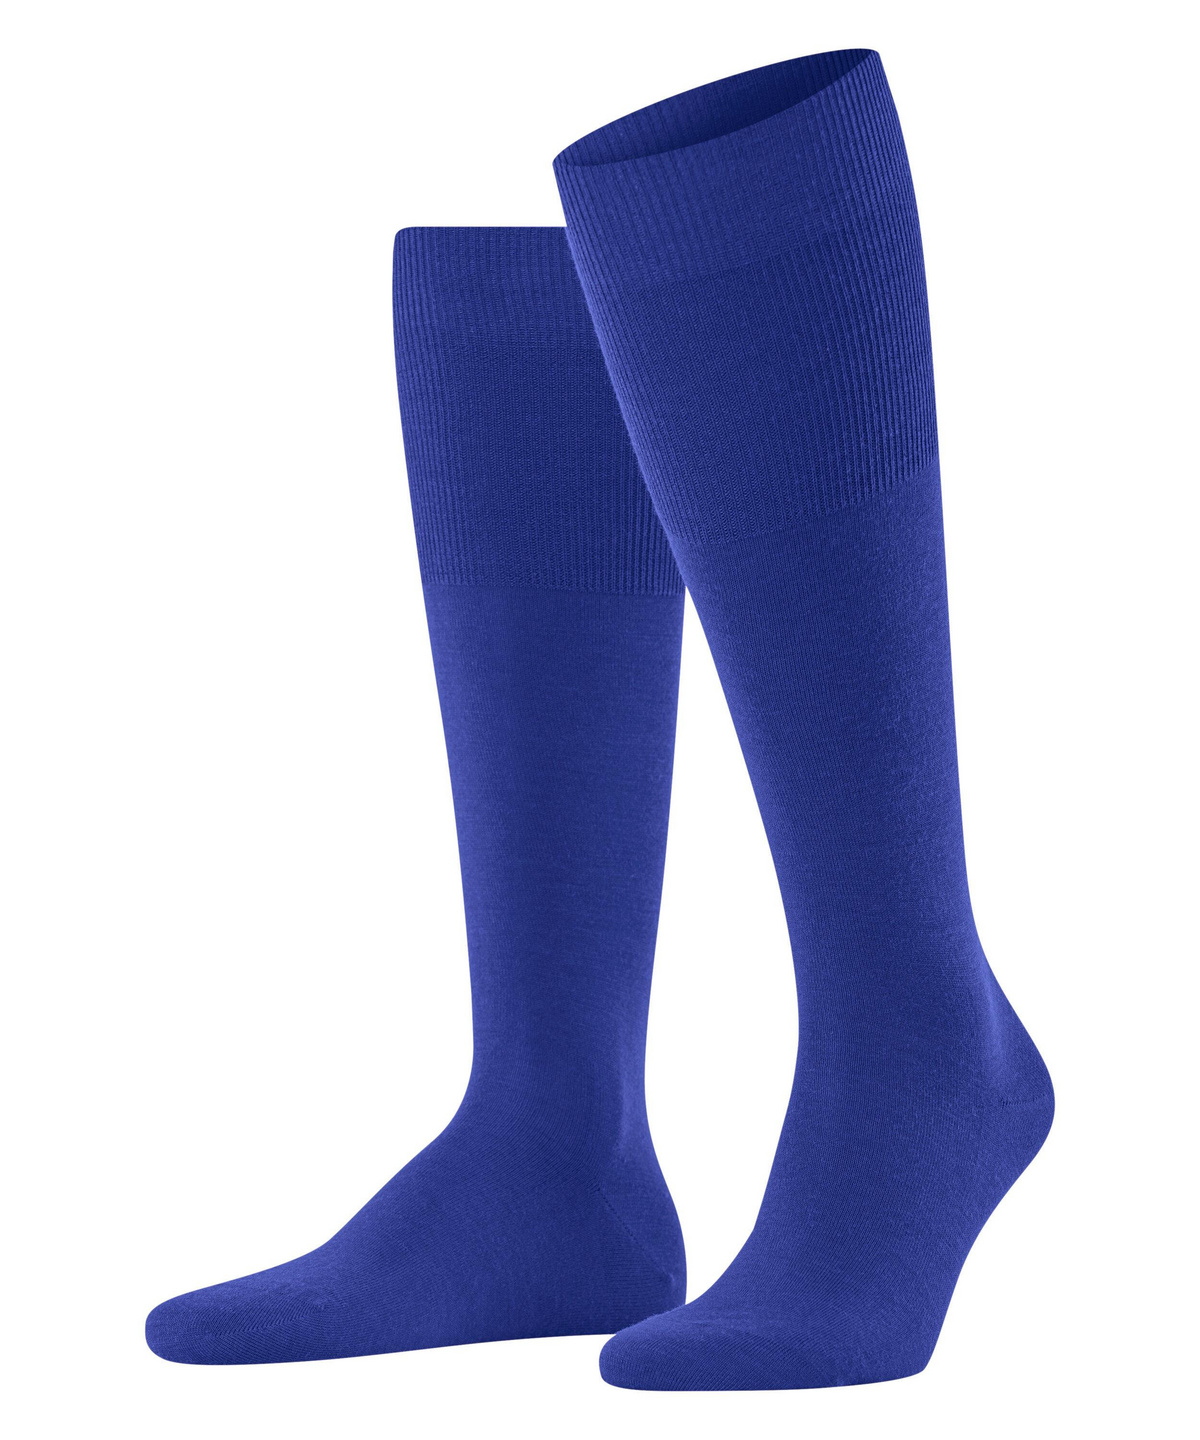 FALKE Airport Perfect-fit Merino Wool Crew Socks in Blue for Men Mens Clothing Underwear 